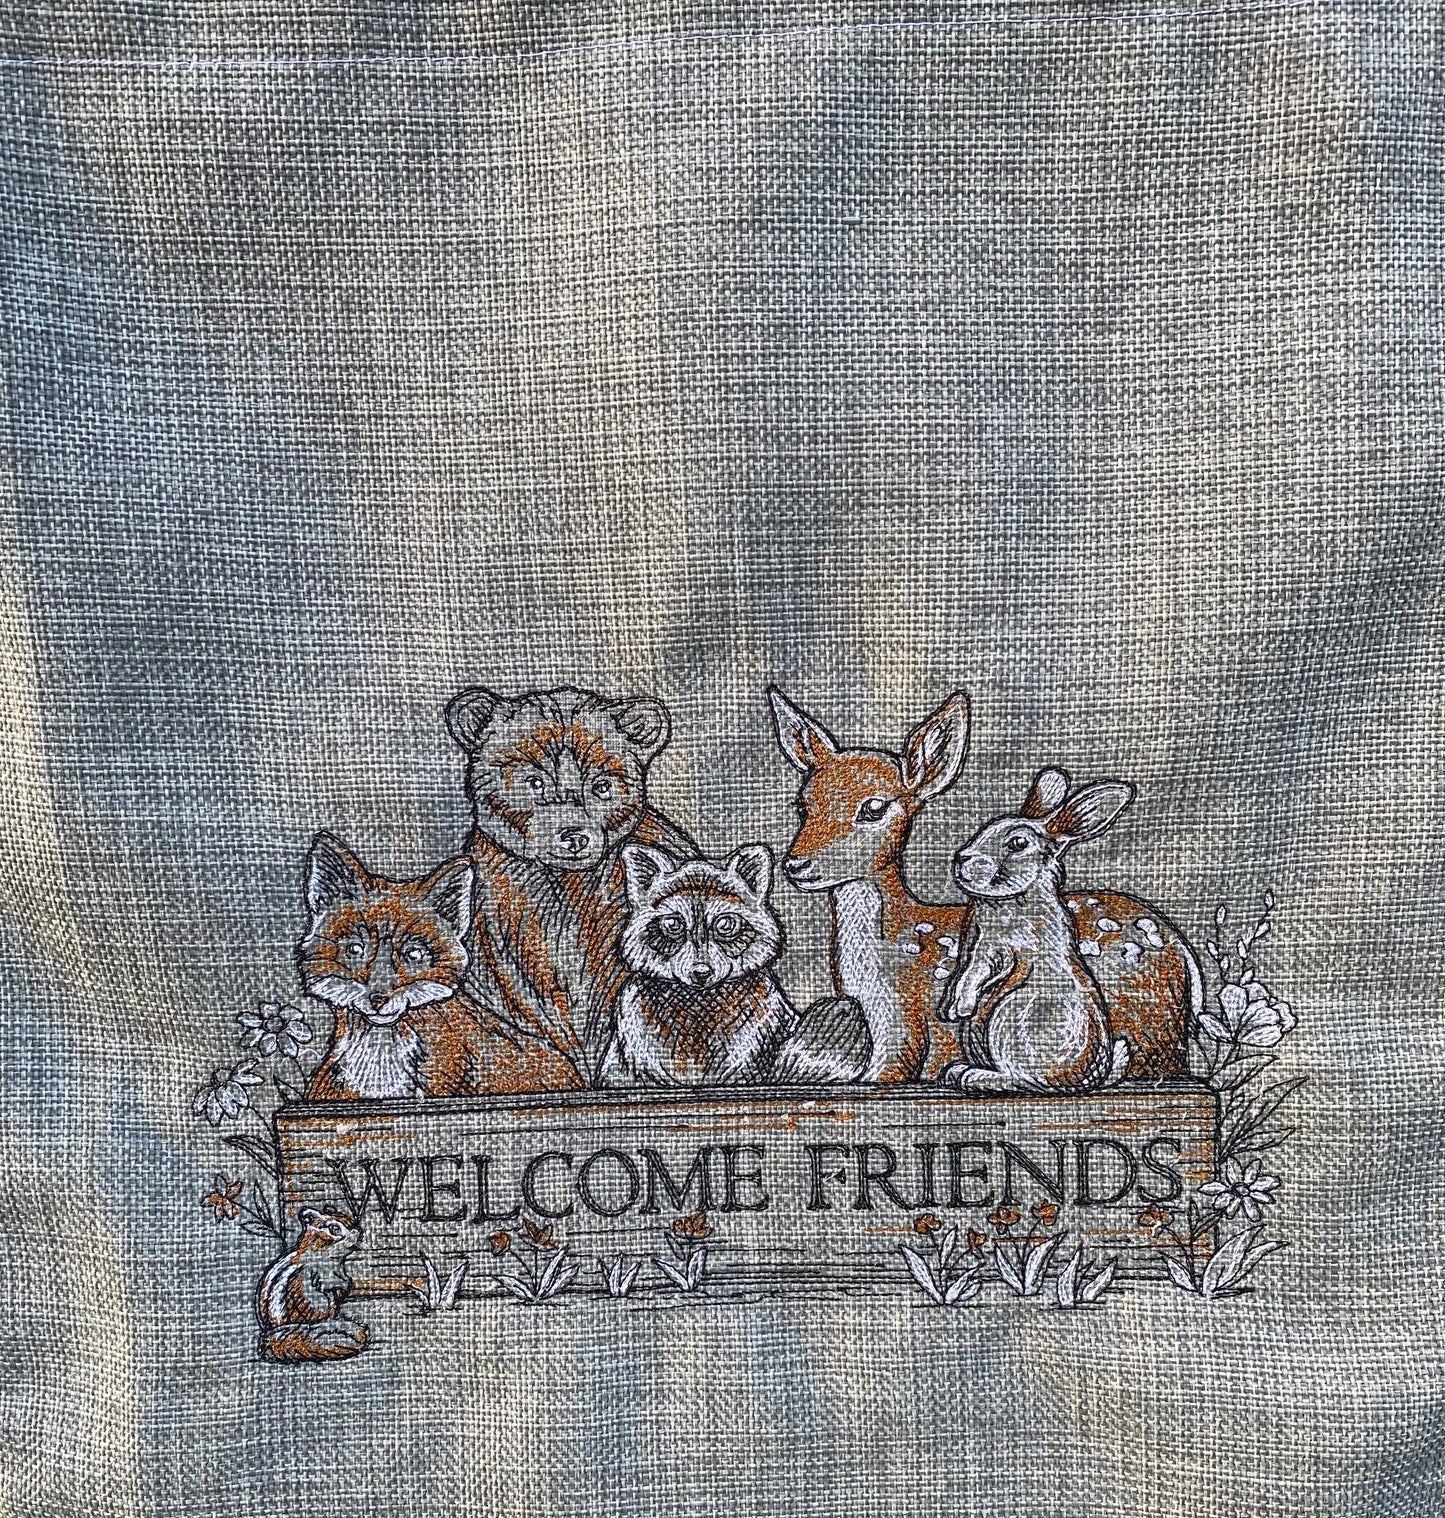 Garden Flag - Welcome Friends (Gray)